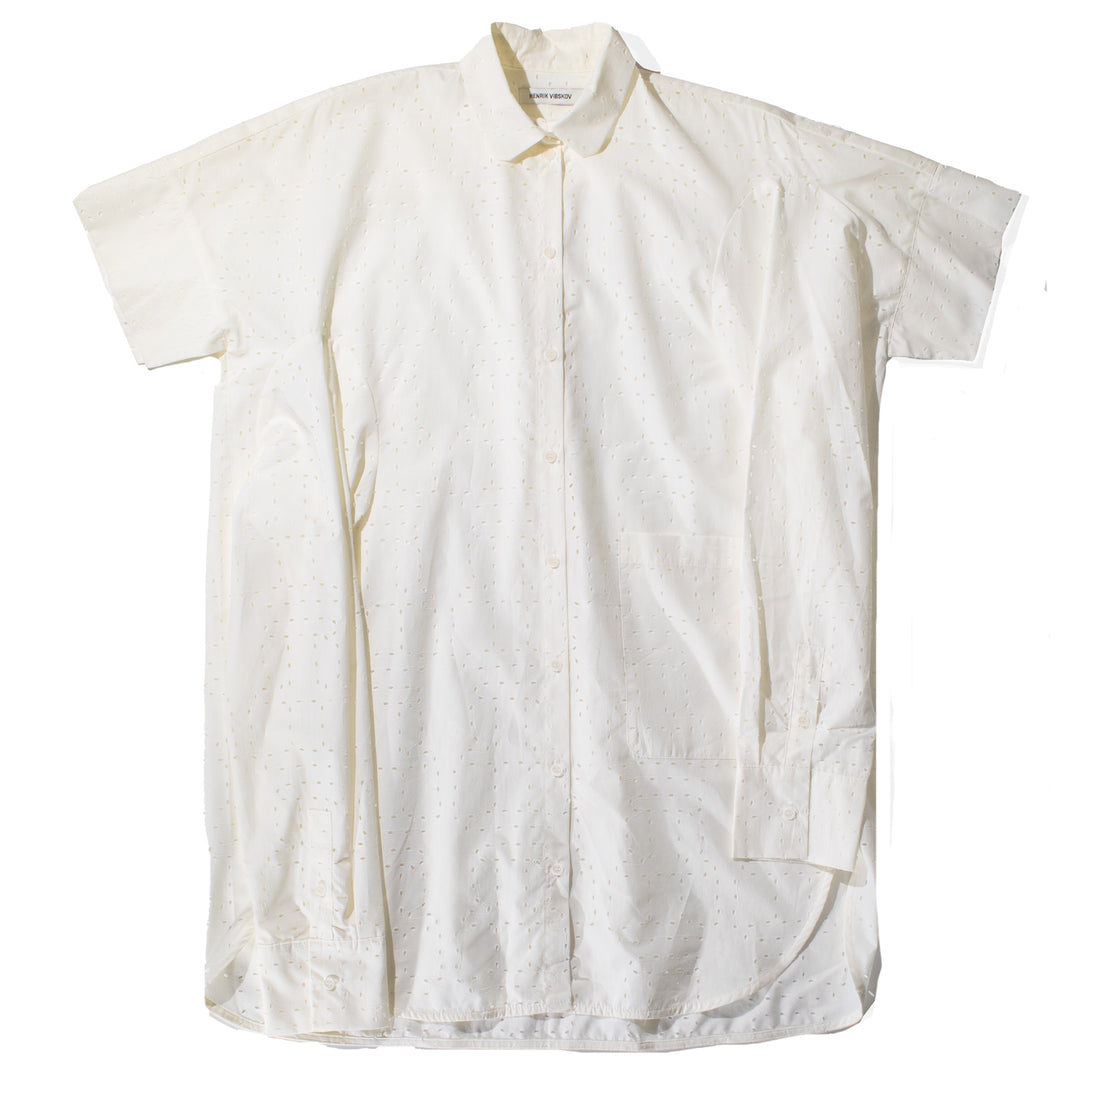 Henrik Vibskov Fold Shirt Dress in White Punched Boxes